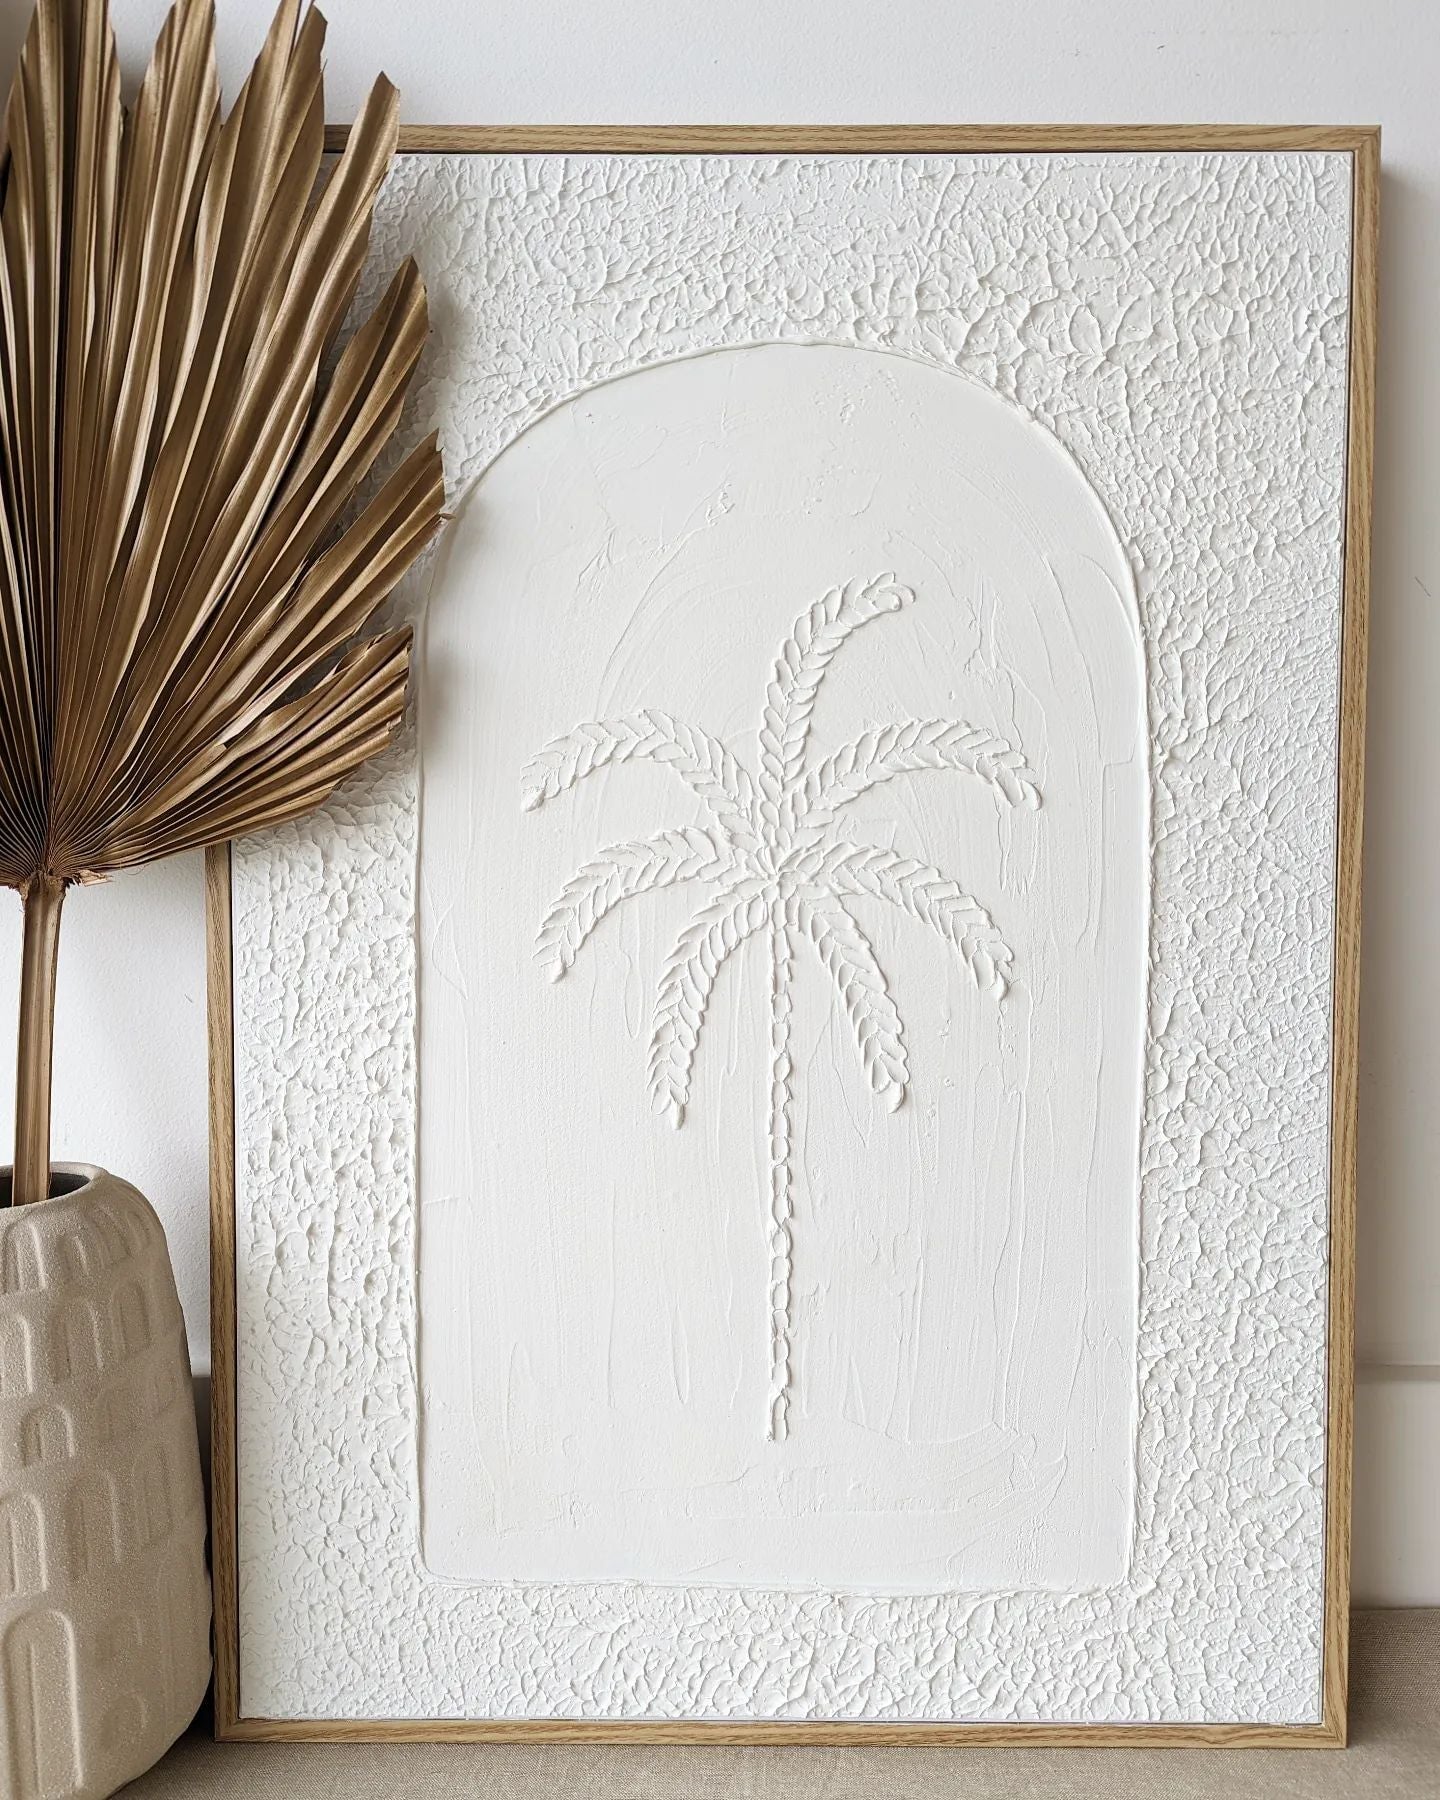 Textured Plaster Art Clam Shell/Palm Tree Duo Sun Republic 